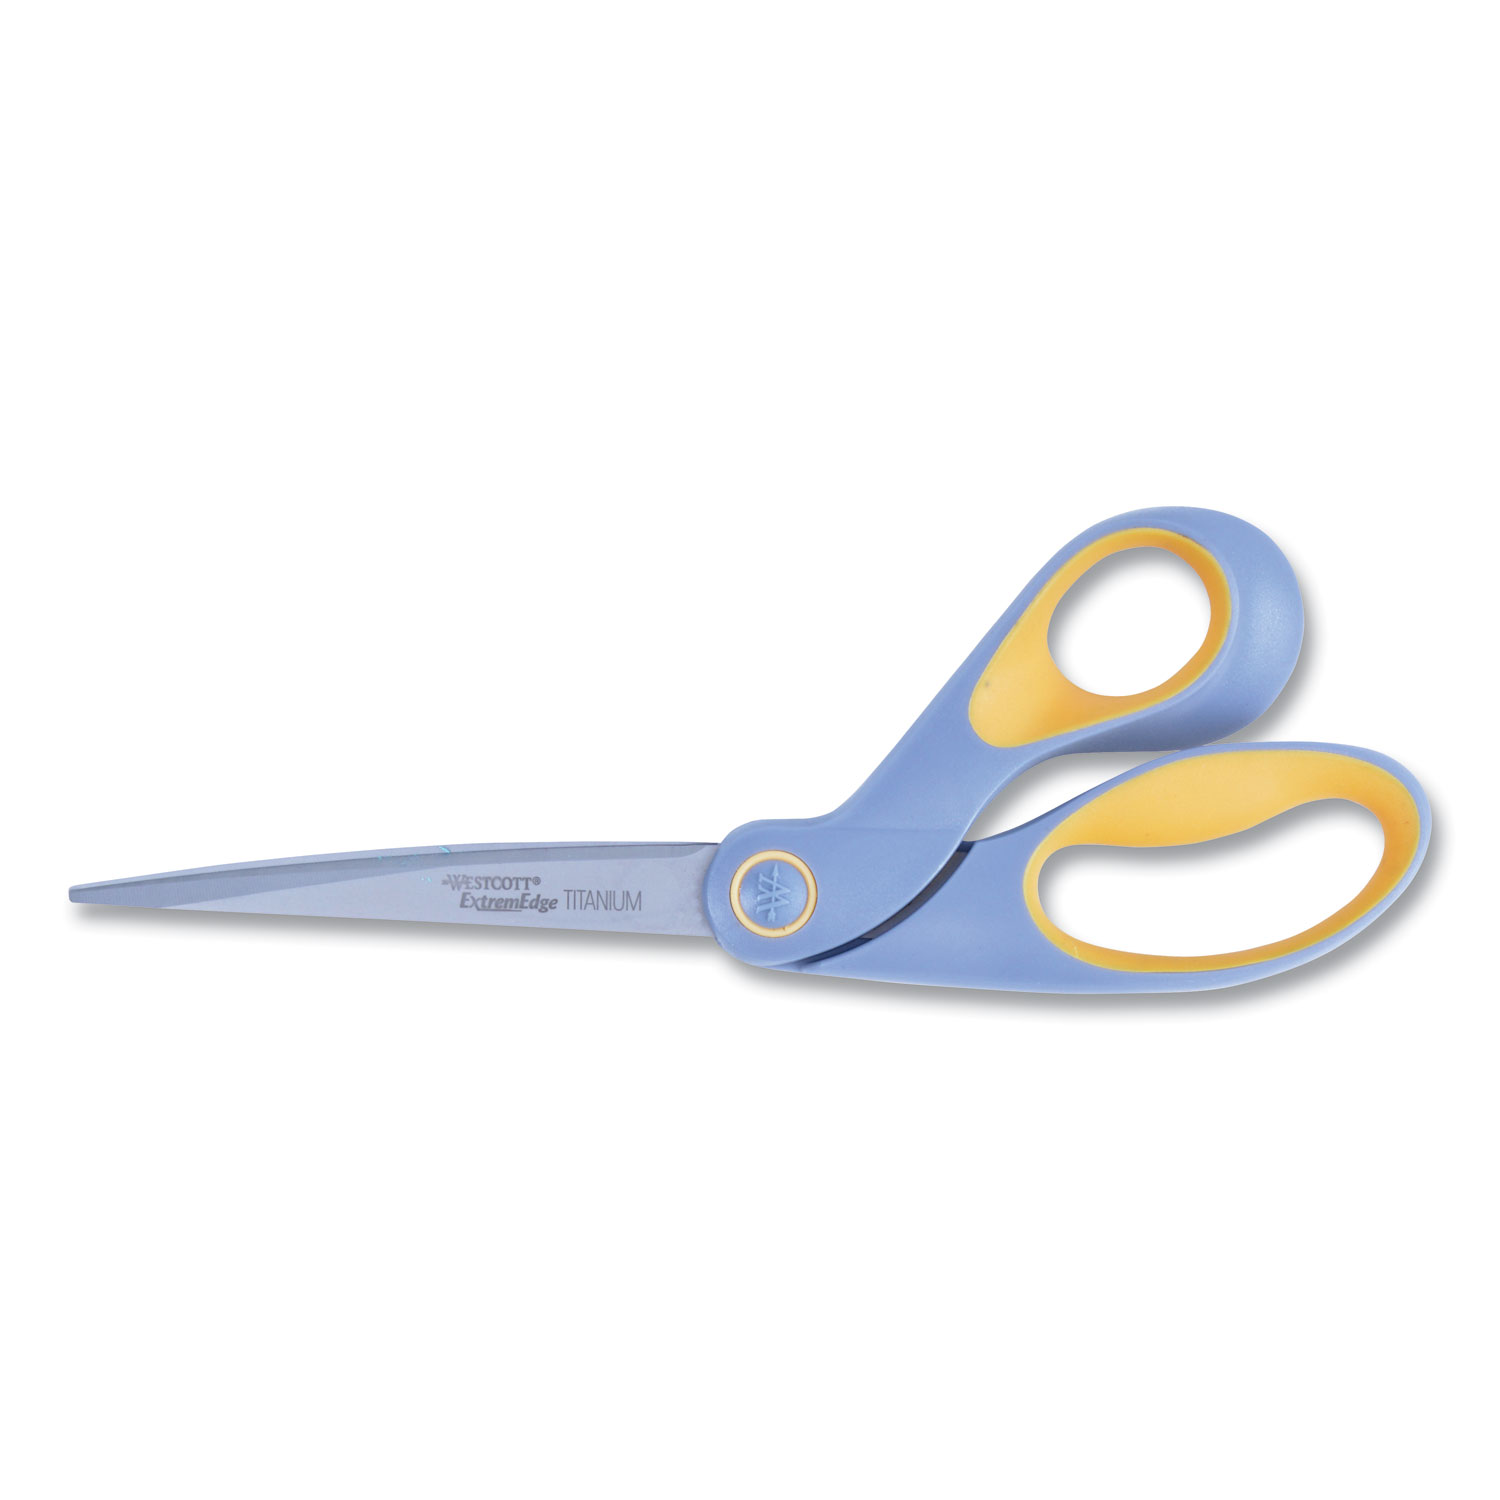  Westcott 14669 ExtremEdge Titanium Bent Scissors, 9 Long, 4.5 Cut Length, Gray/Yellow Offset Handle (ACM14669) 